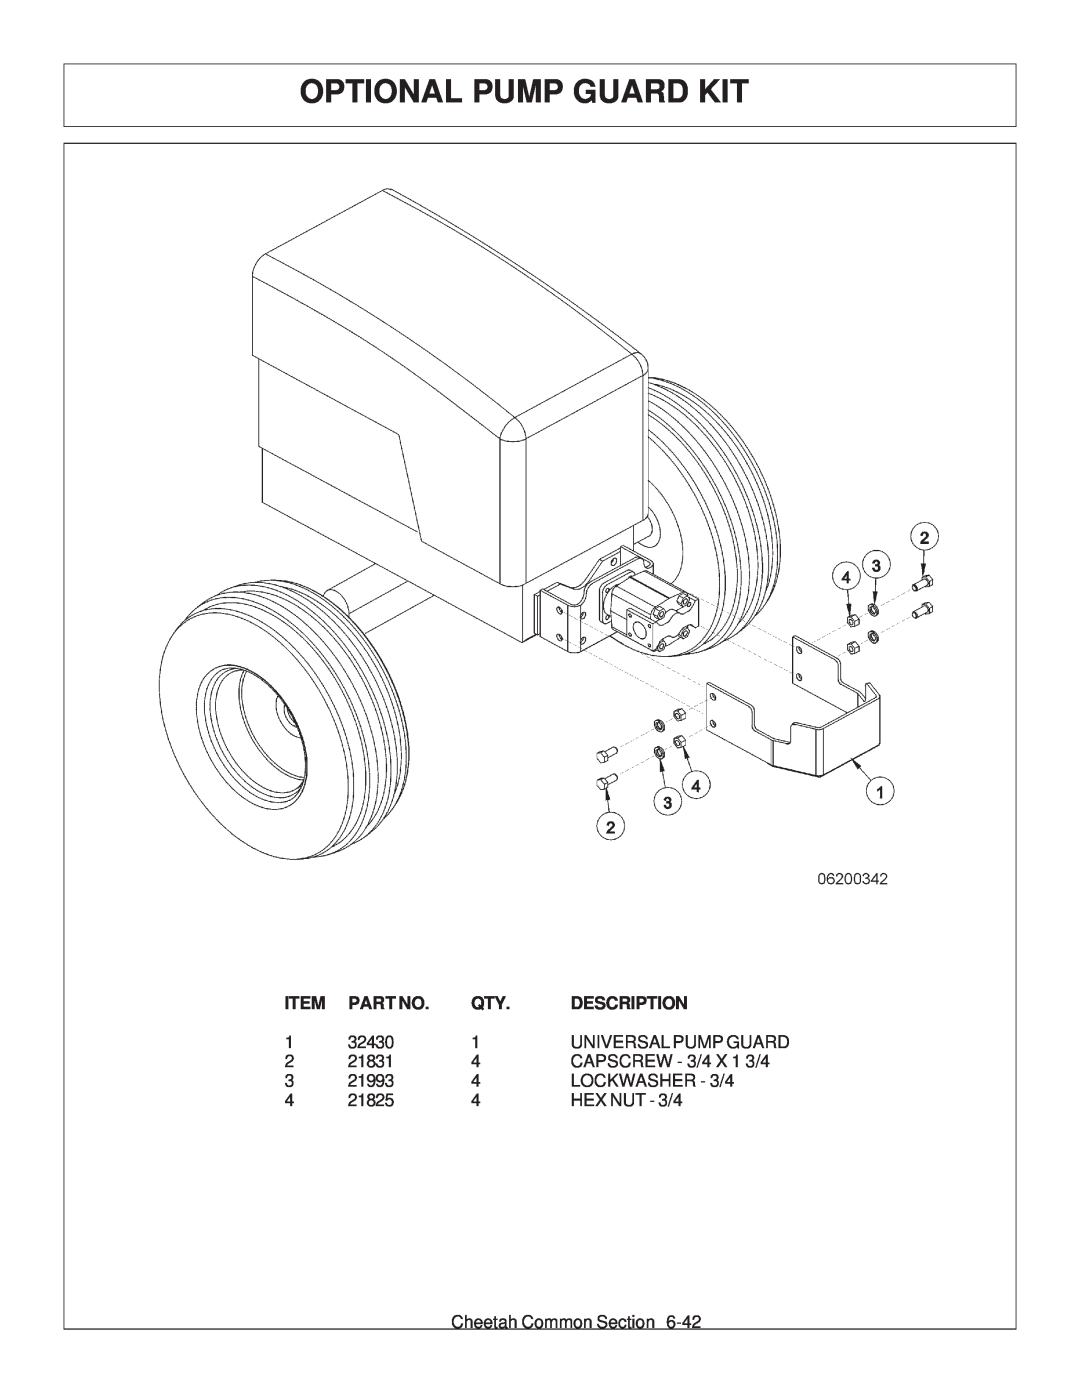 Tiger Products Co., Ltd JD 5093E, JD 5101E, JD 5083E manual Optional Pump Guard Kit, Description 